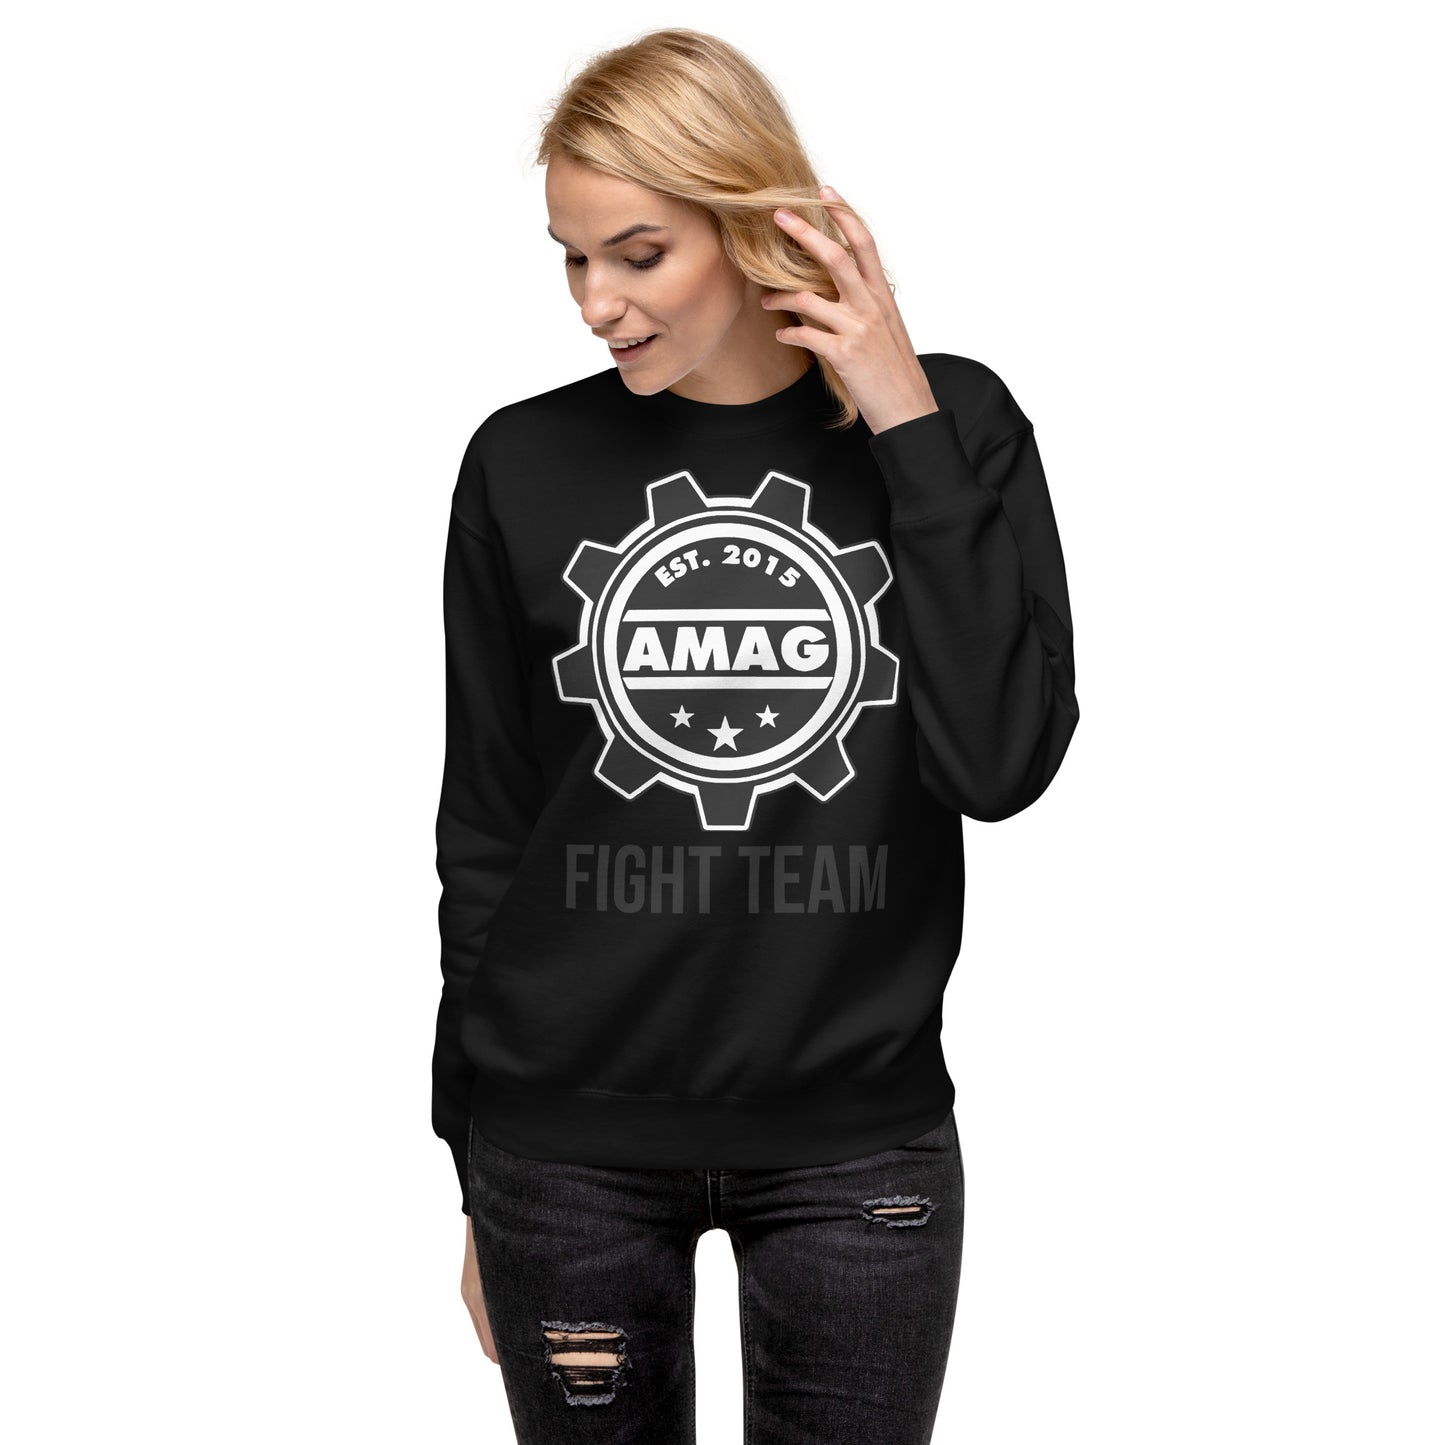 AMAG Fight Team Sweat Shirt